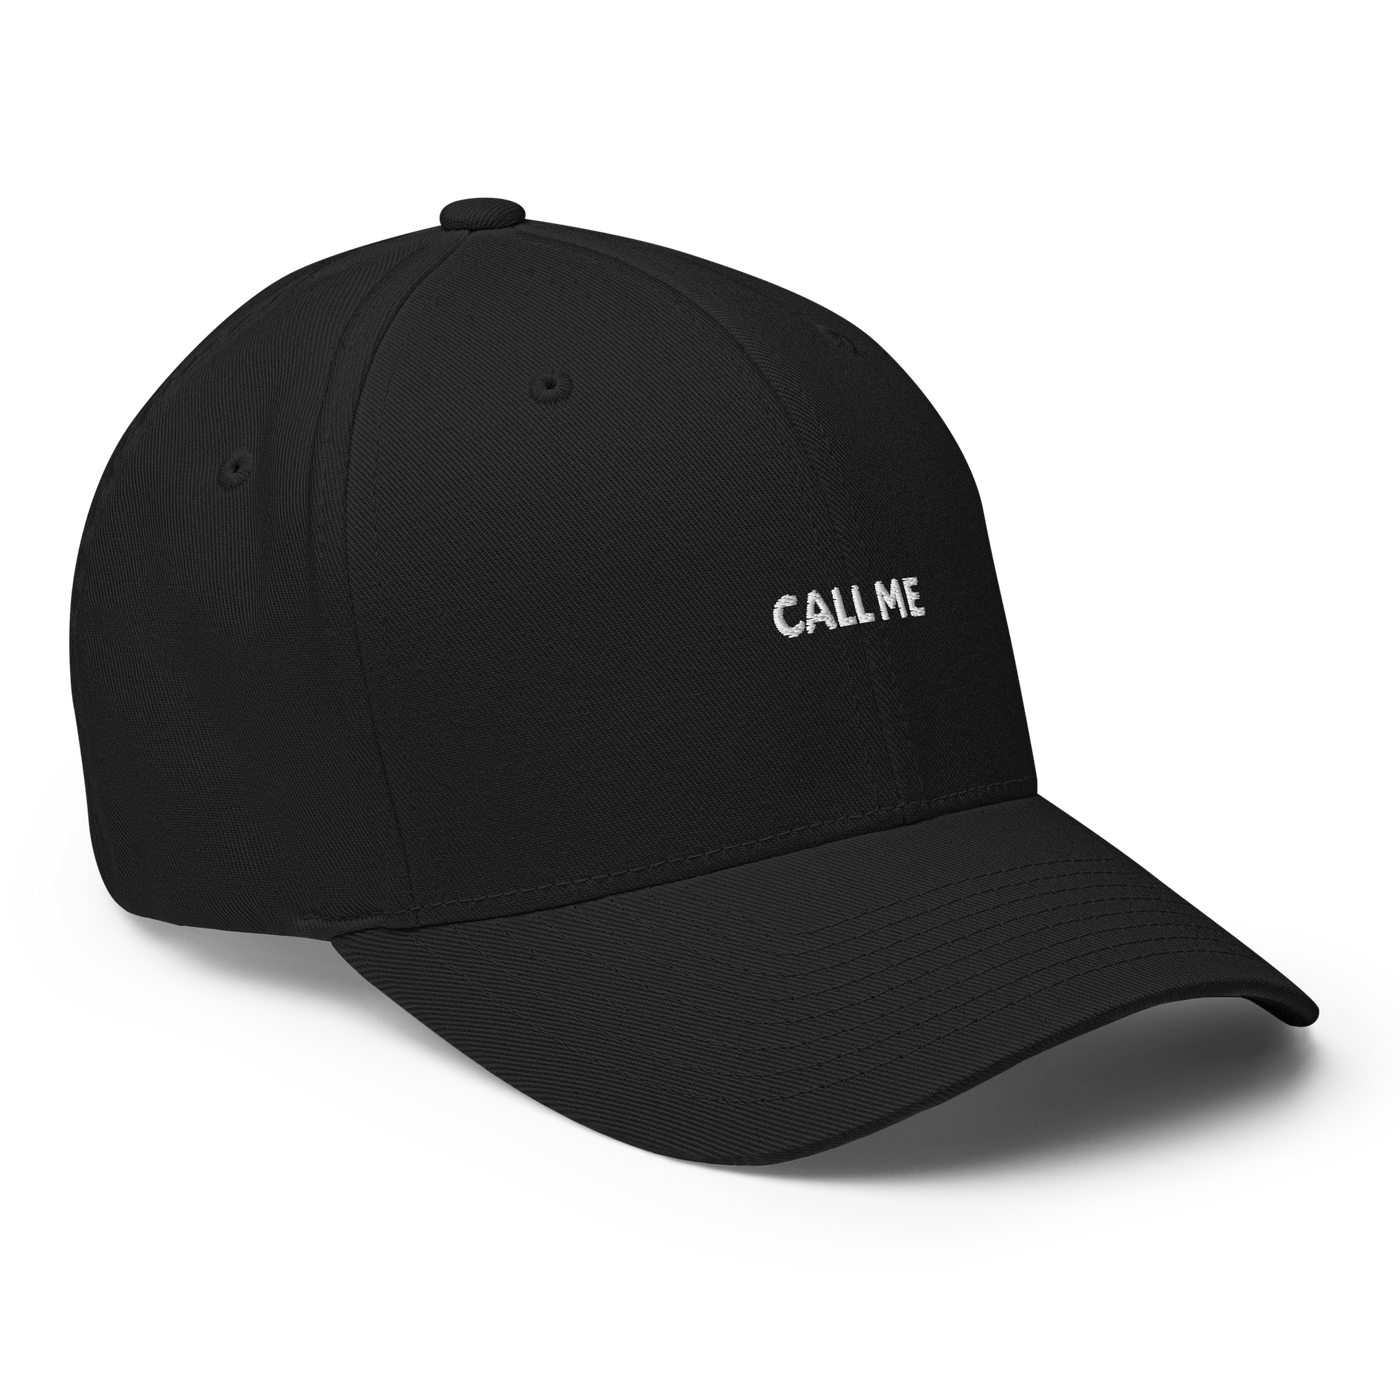 Call Me Flexfit Cap - Black - S/M - Just Another Cap Store